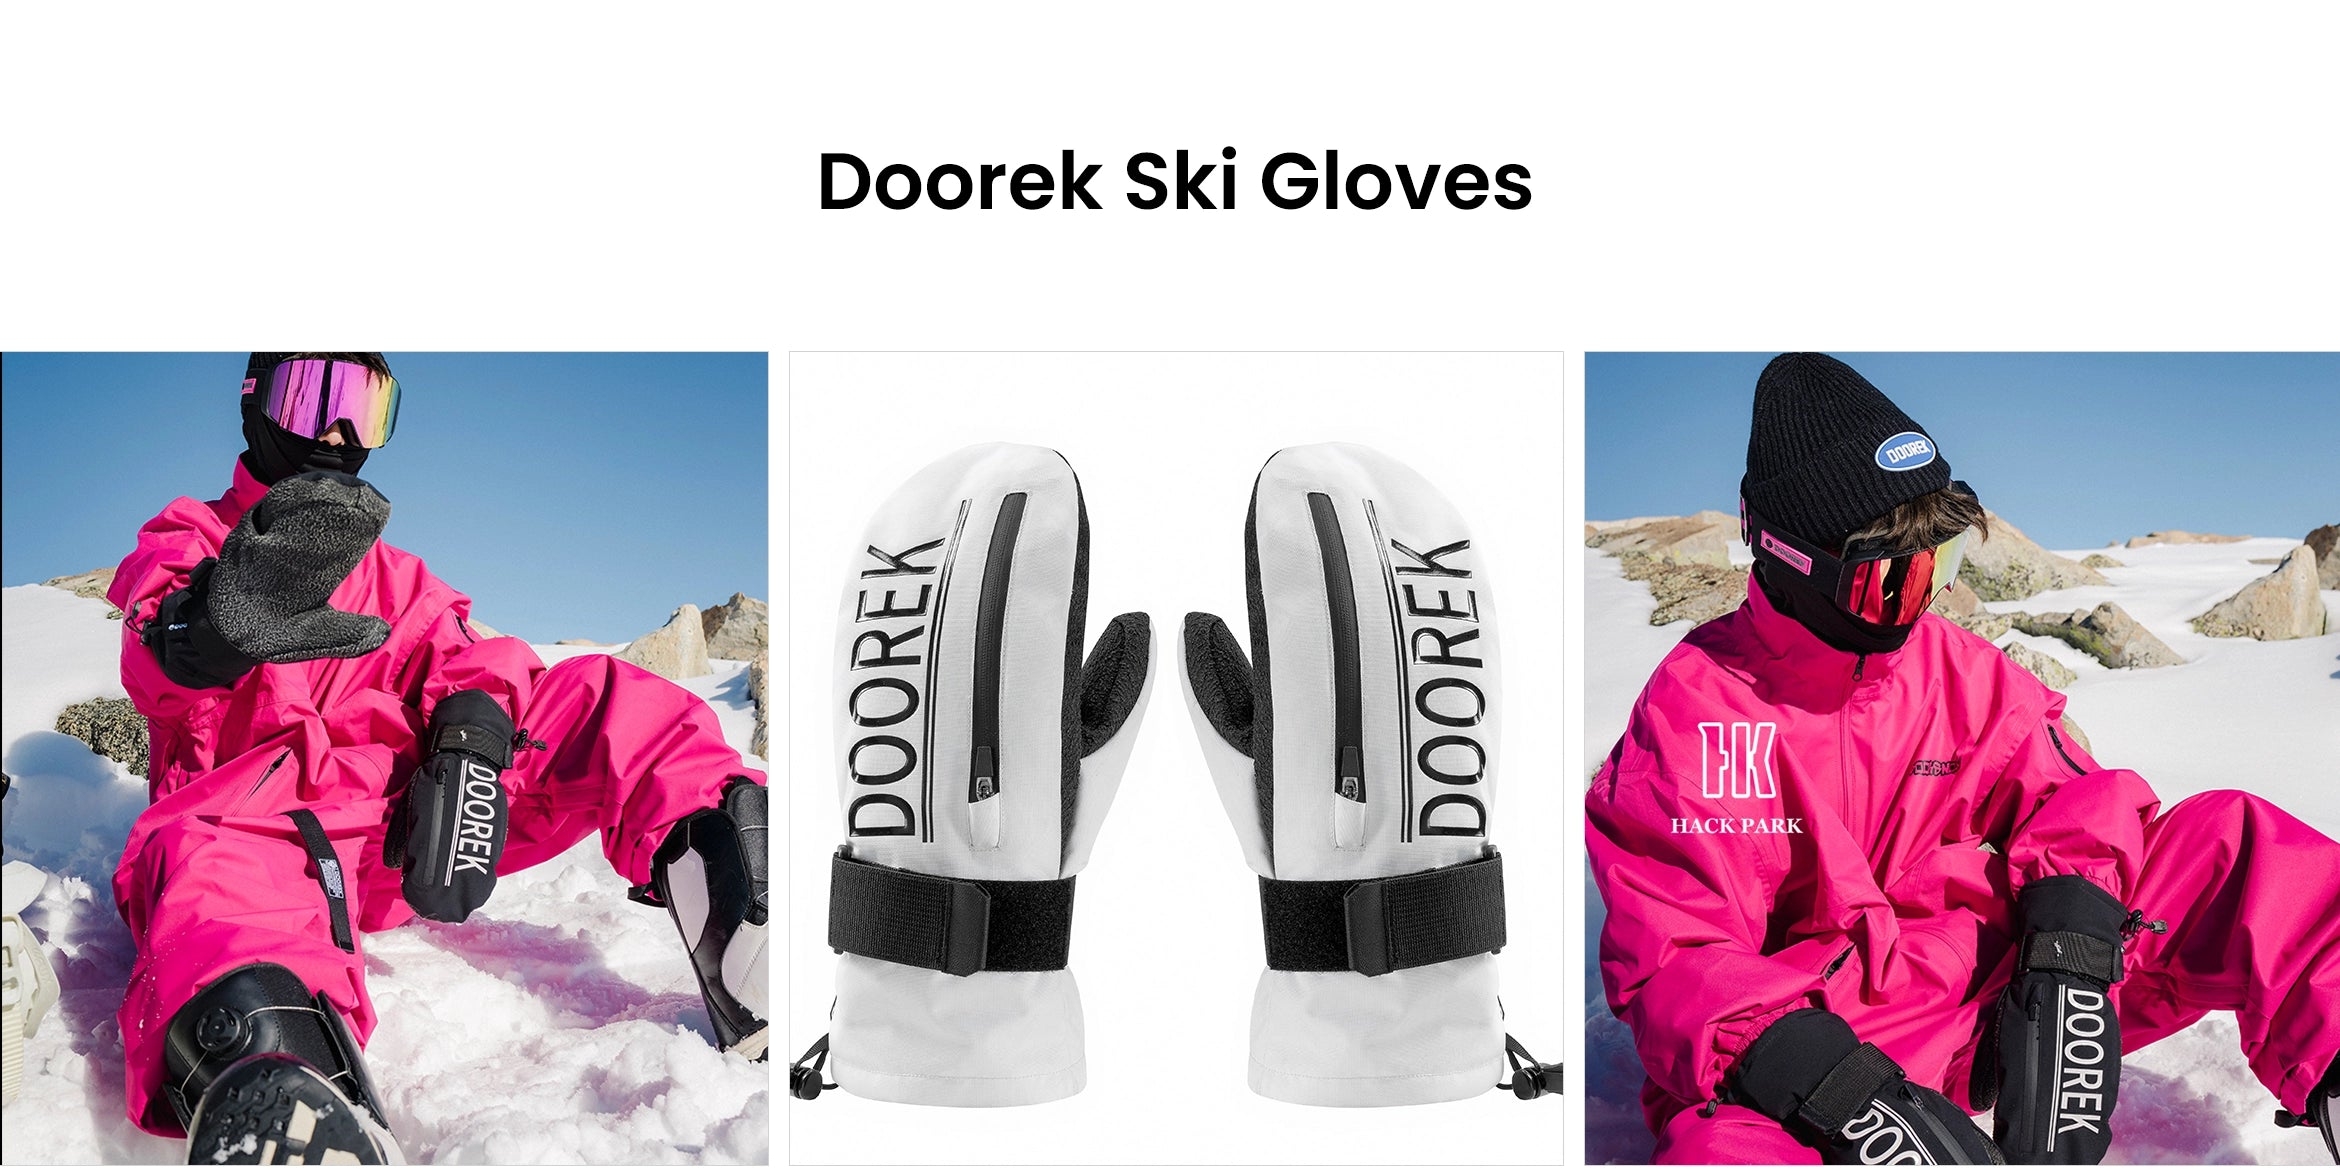 1. Doorek Ski Gloves